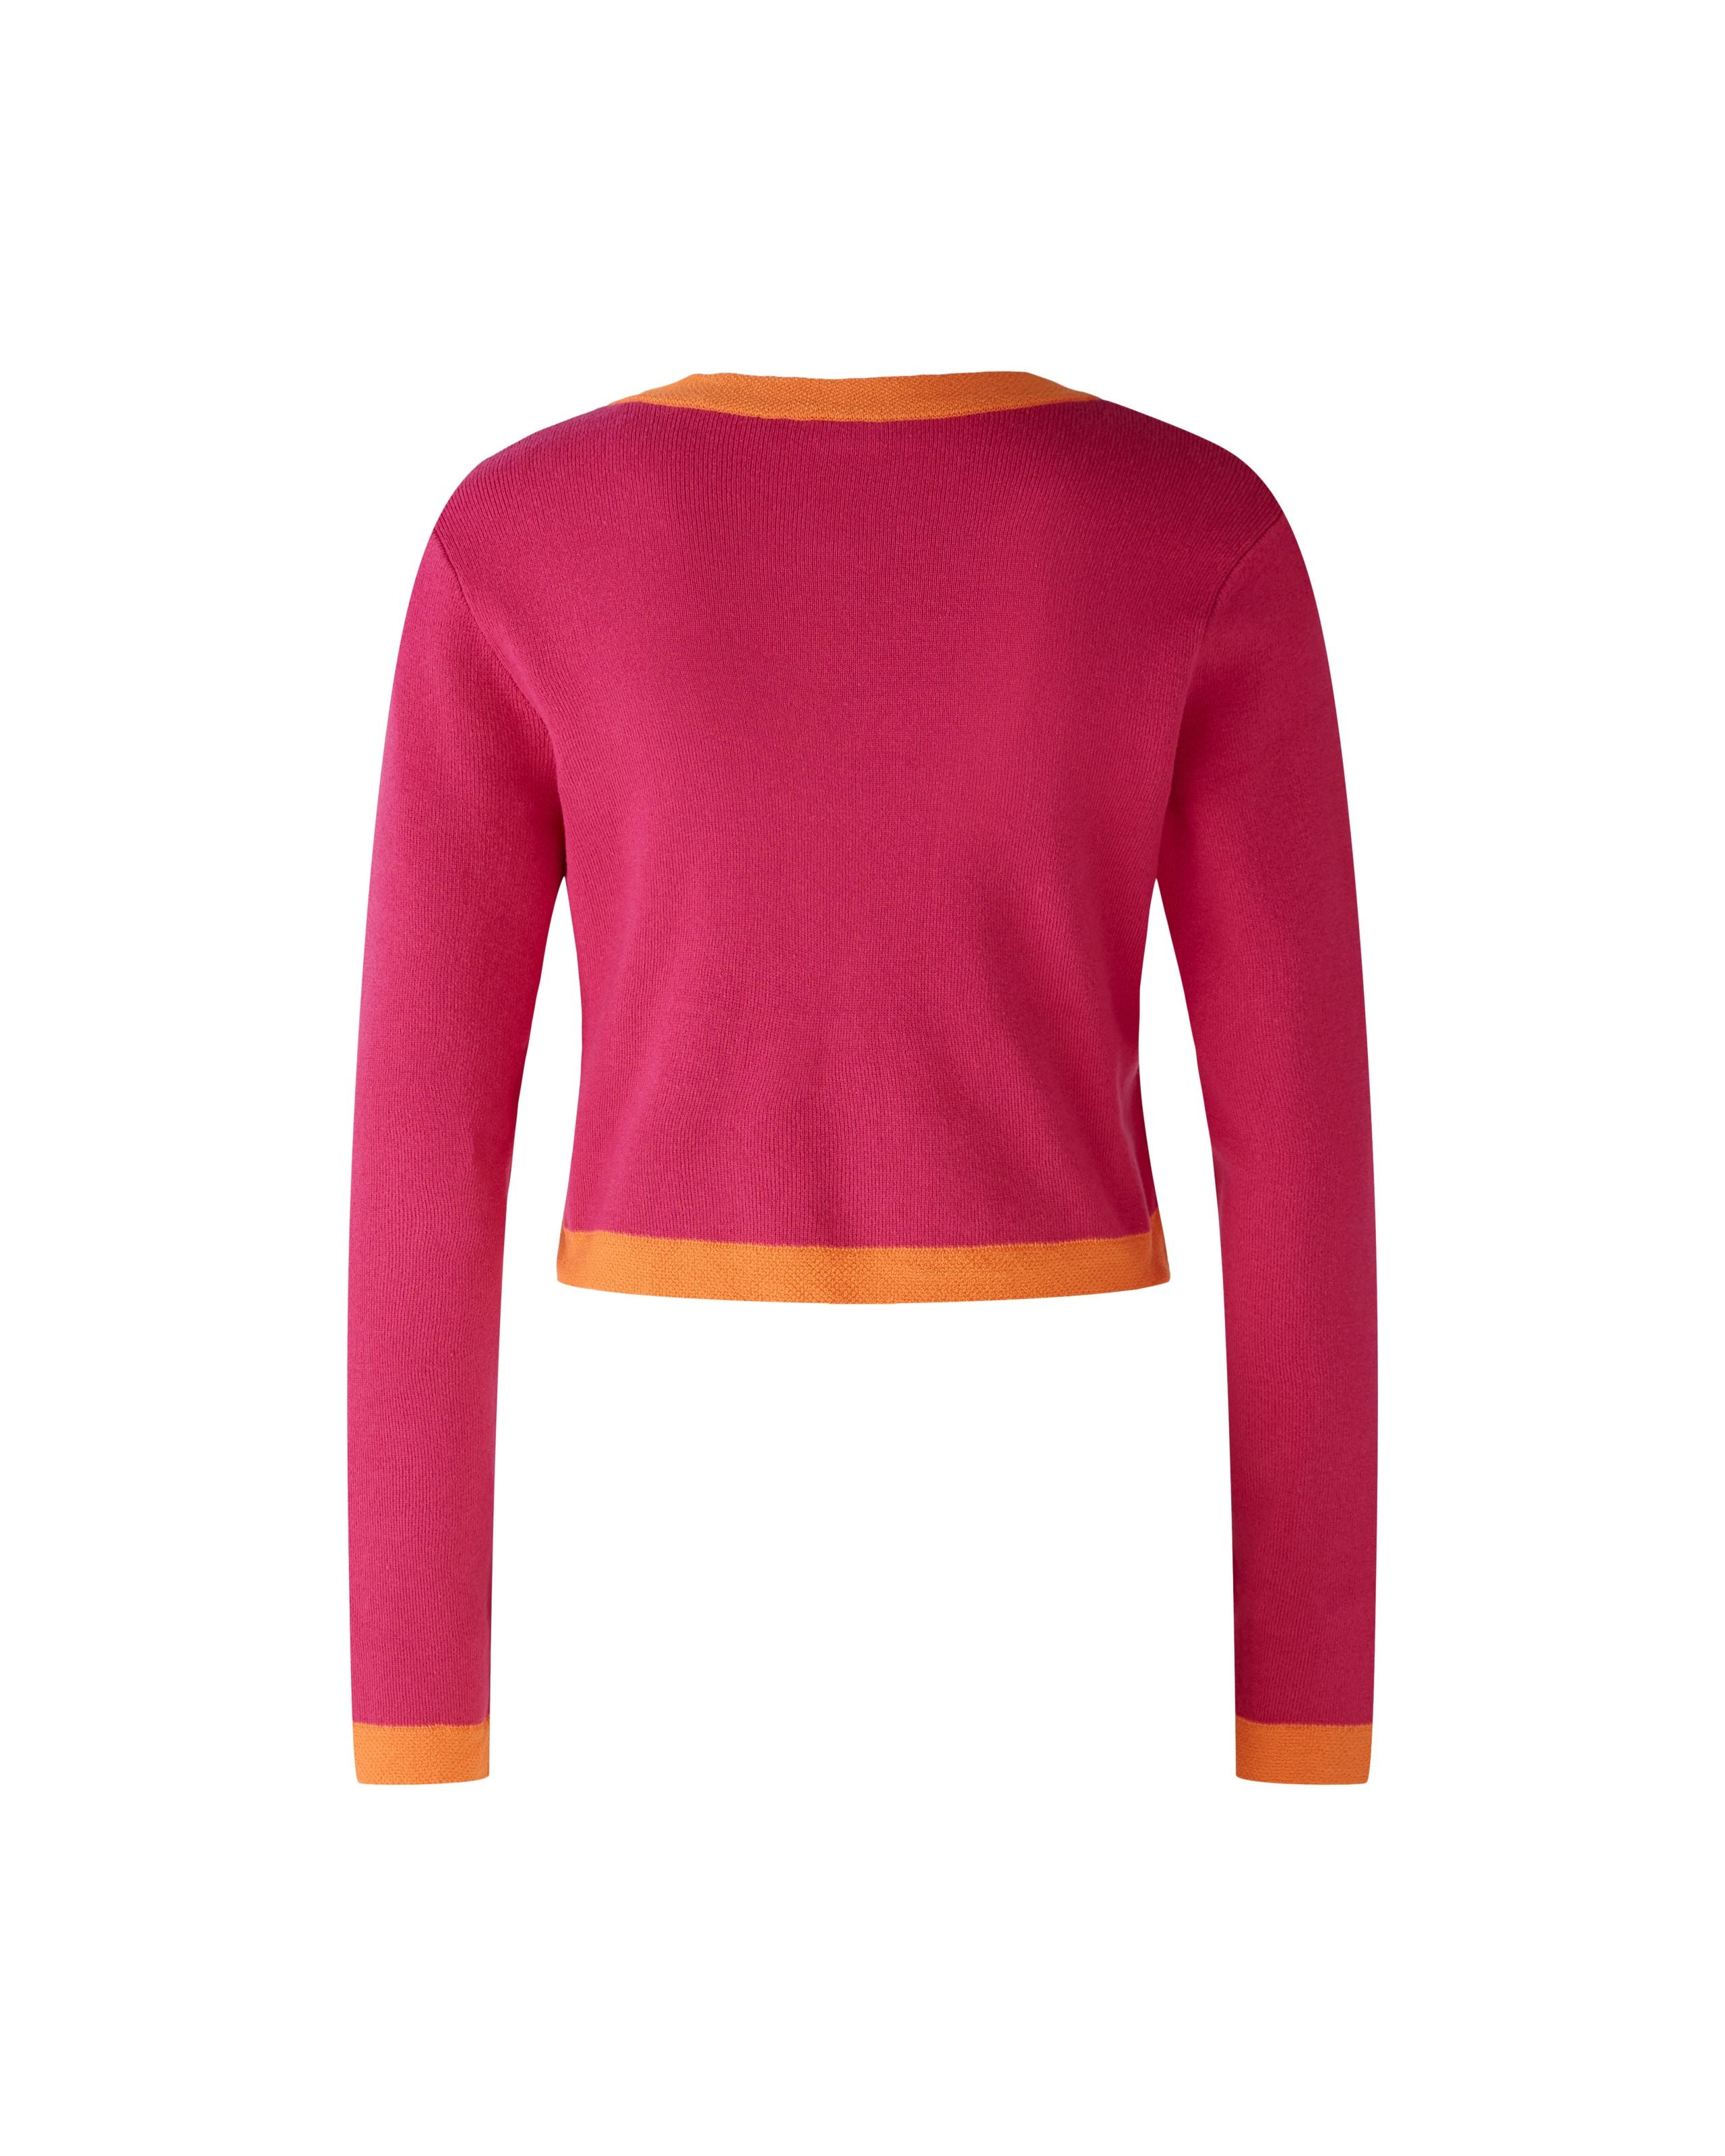 Oui  Colour Block Cotton Cardigan In Pink/Orange - Back